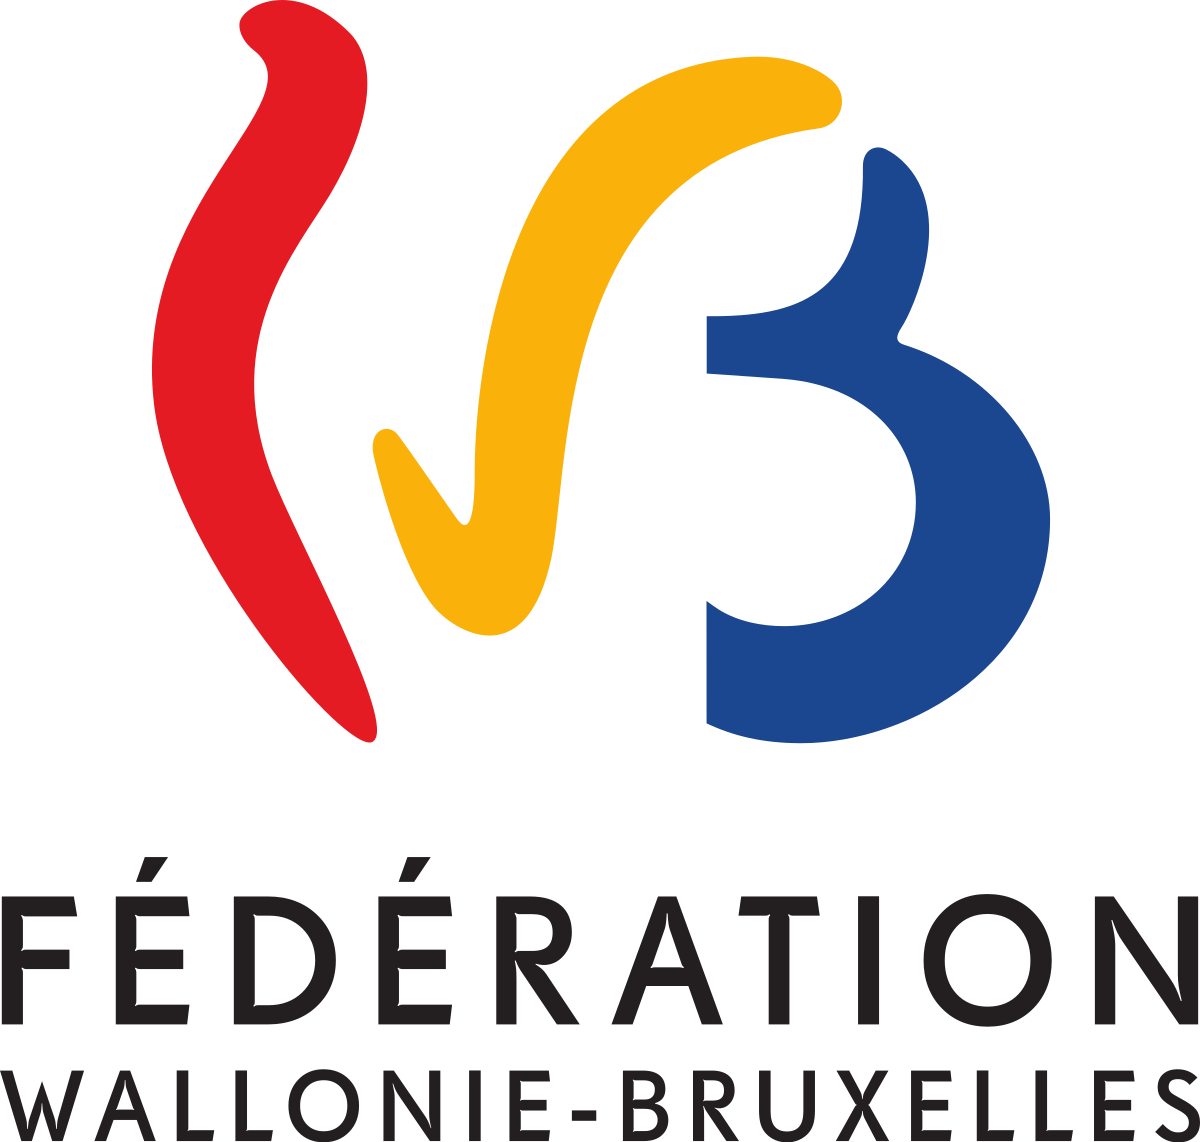 Federation Wallonie Bruxelles logo 2011